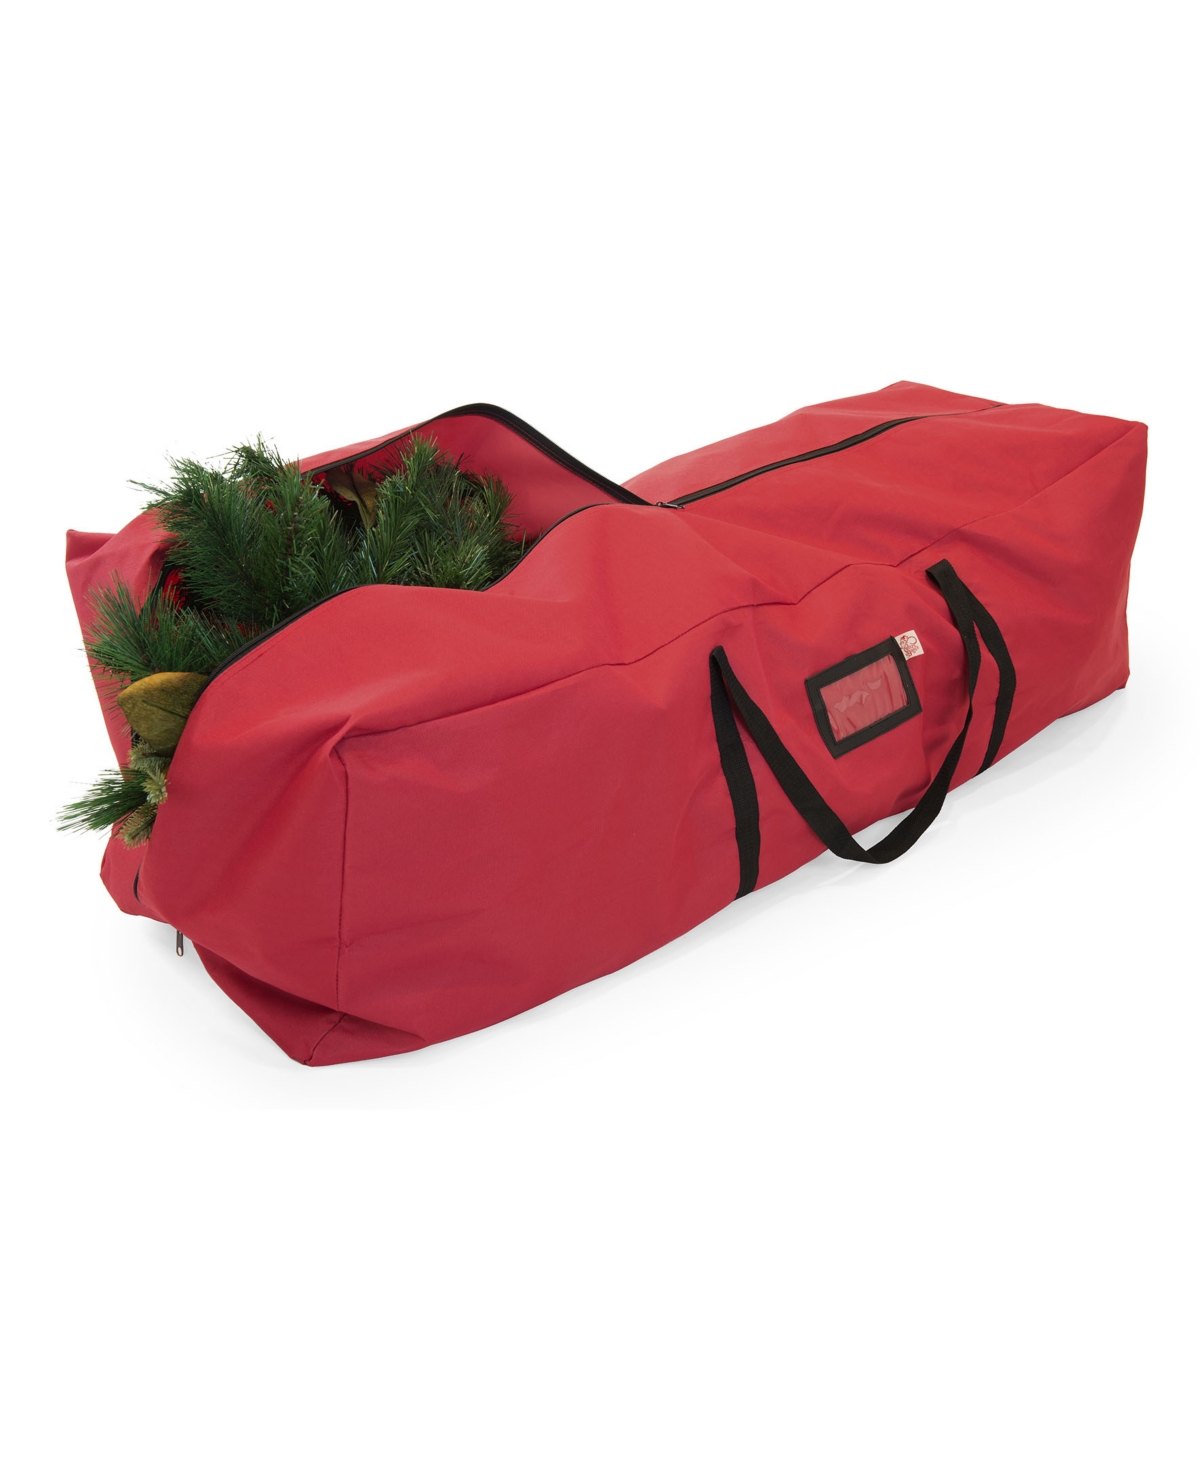 Multi Use Christmas Decoration Storage Bag, 48" - Red